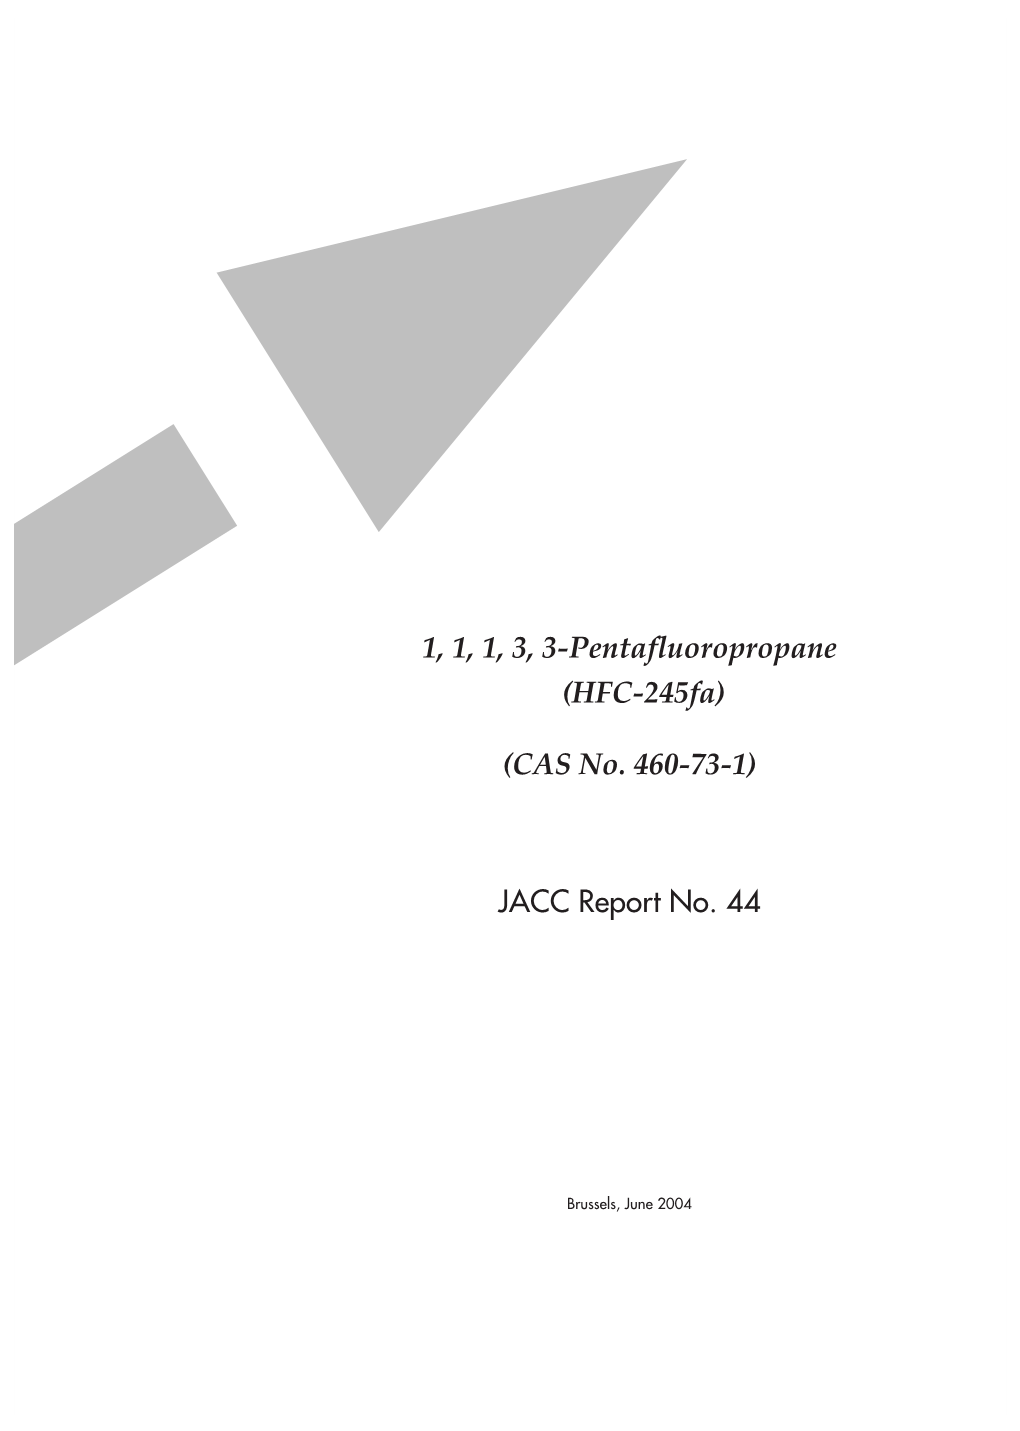 1, 1, 1, 3, 3-Pentafluoropropane (HFC-245Fa) (CAS No. 460-73-1)